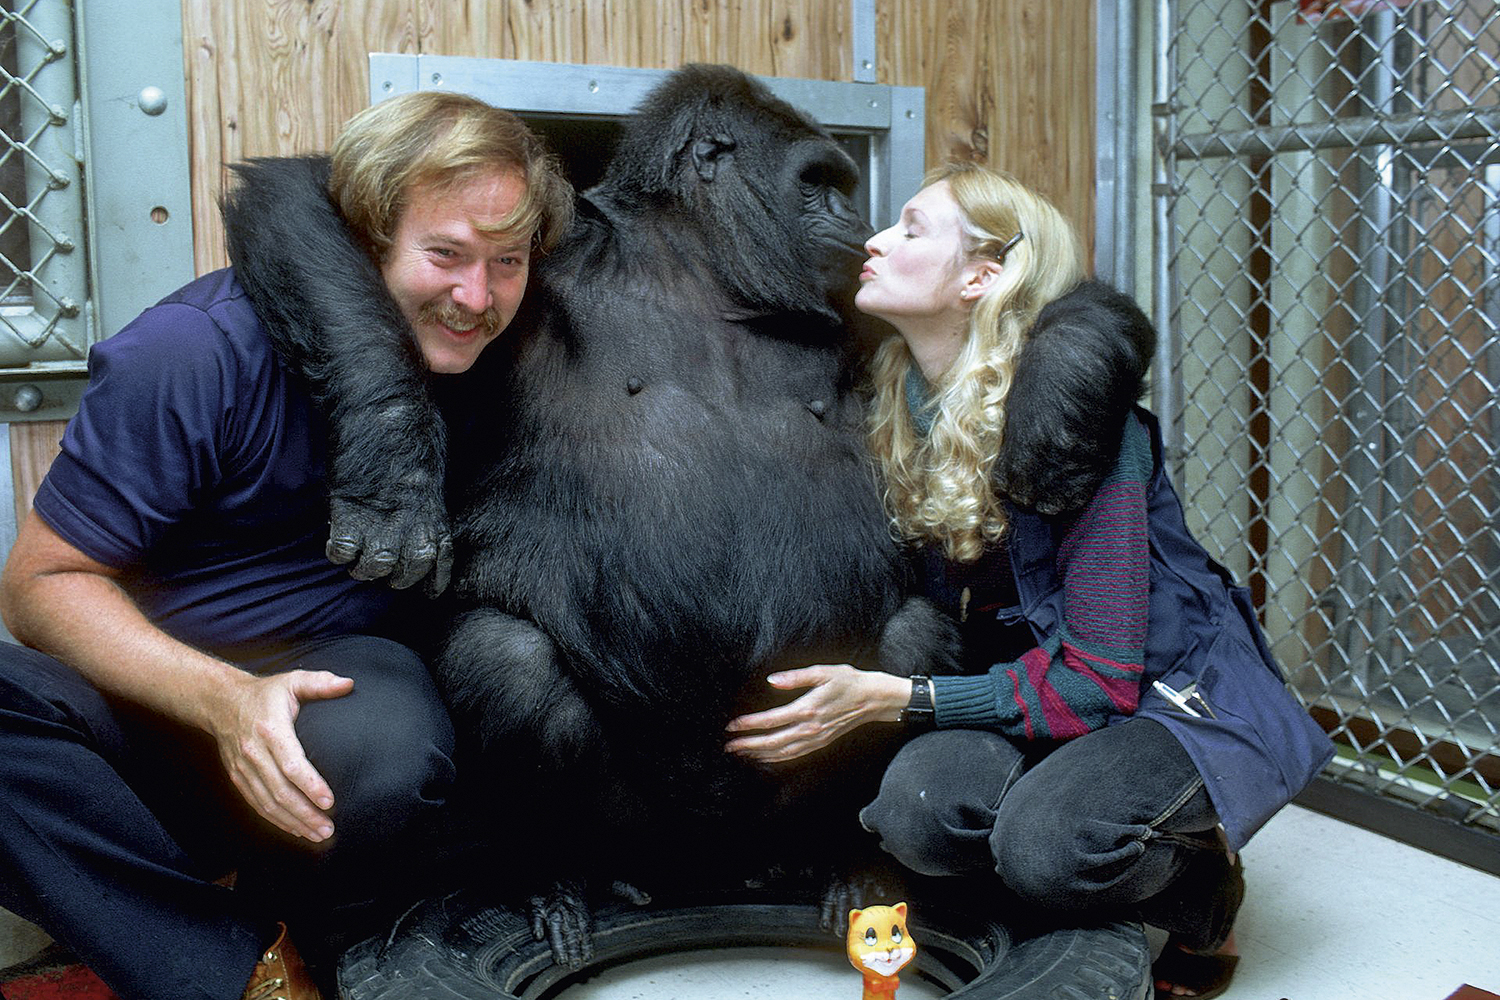 ELOQUENTE - Koko ao lado de seus cuidadores: a gorila entendia inglês -